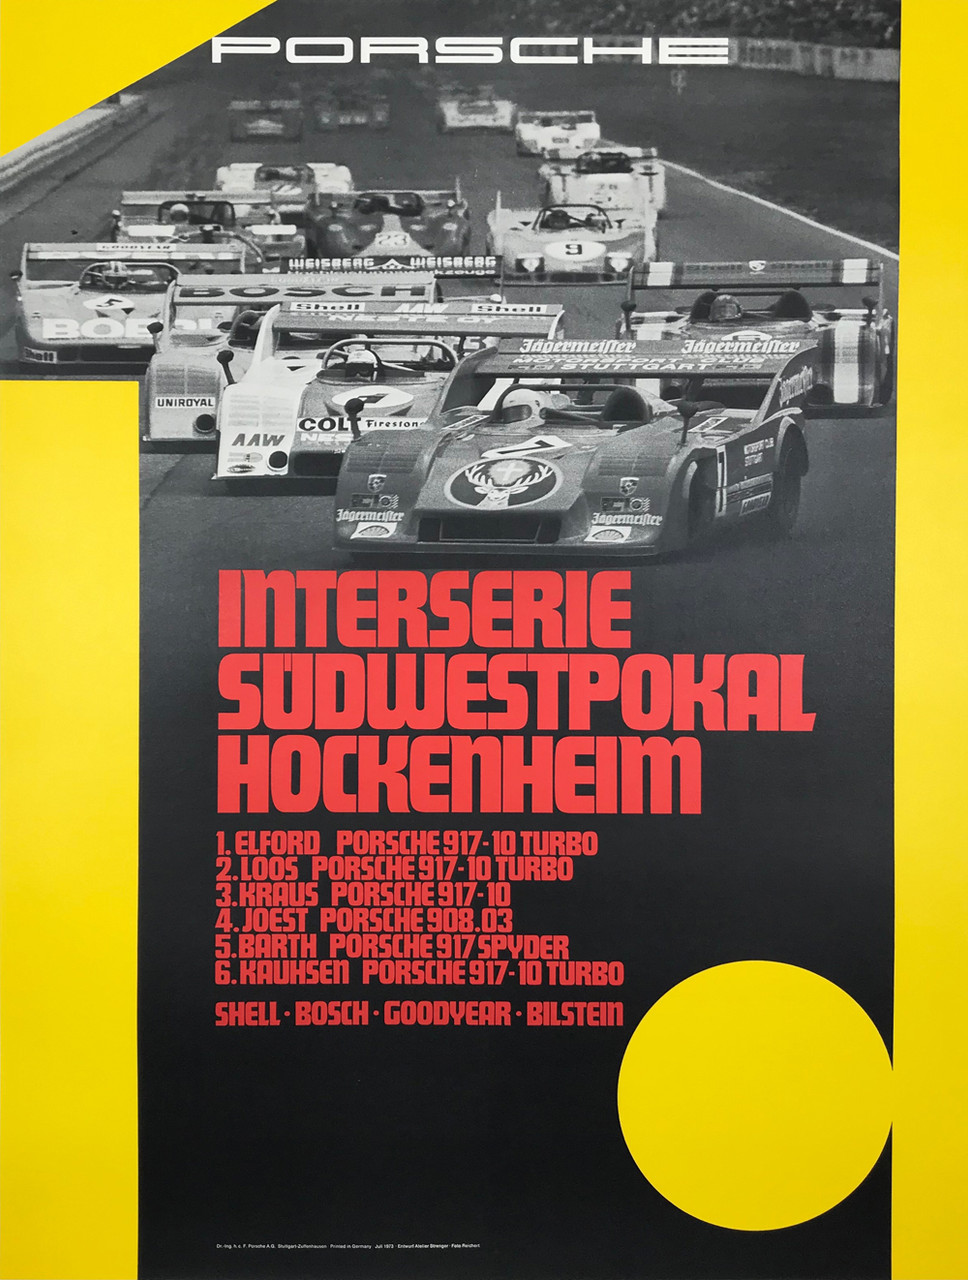 Porsche Interserie Sudwestpokal Hockenheim Poster Photo by Schlegelmich Original 1973 Vintage German Strenger Printing Car Racing  Promotional Advertisement Linen Backed. 